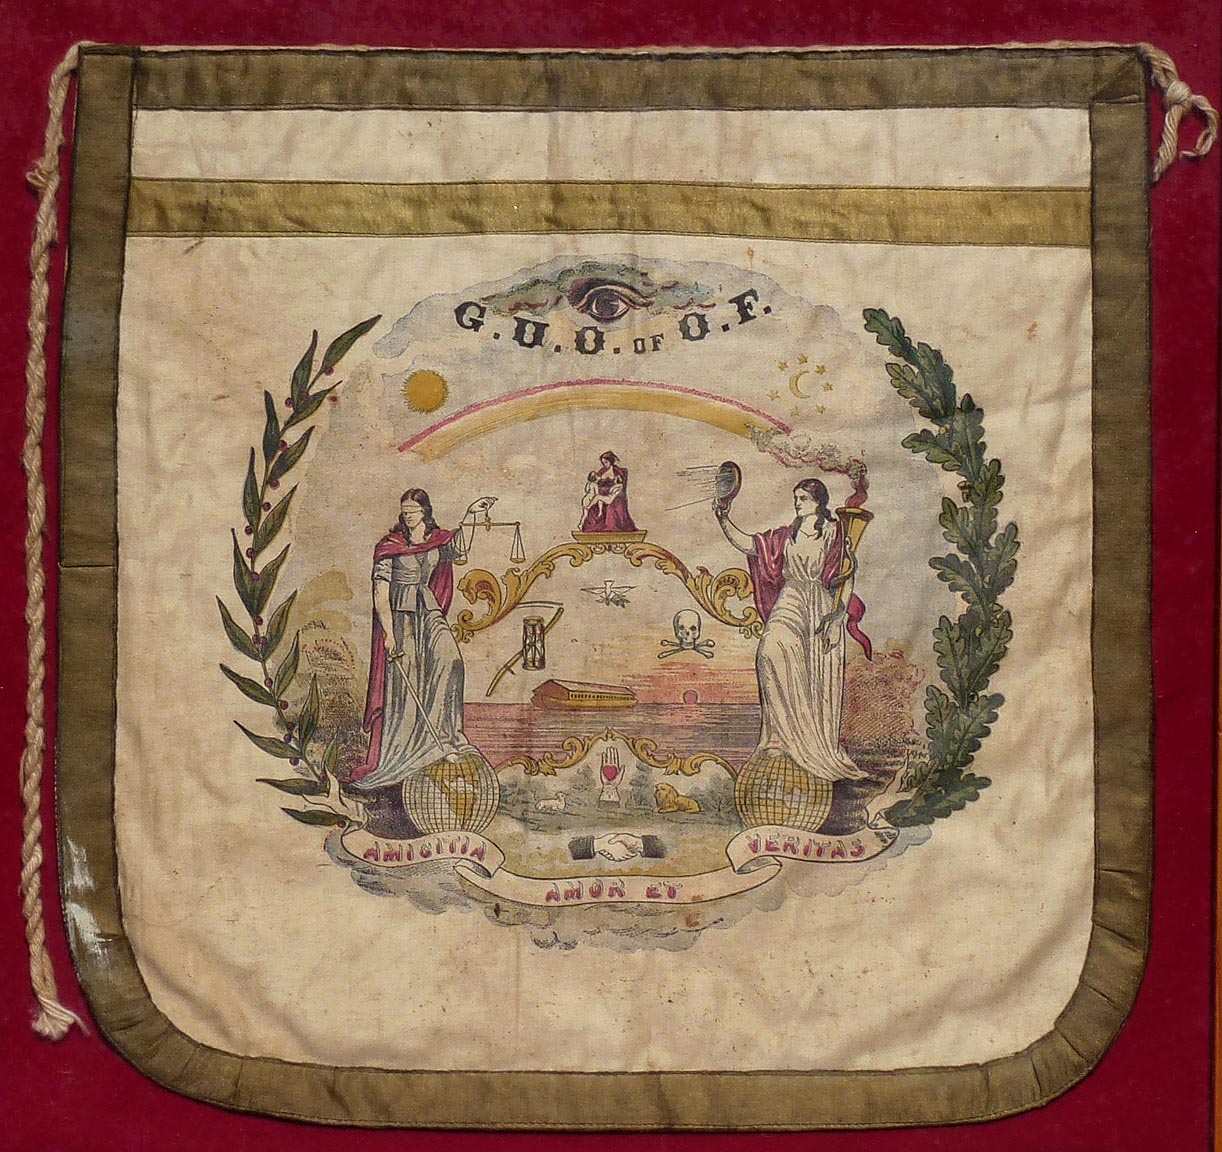 Odd Fellows ceremonial apron